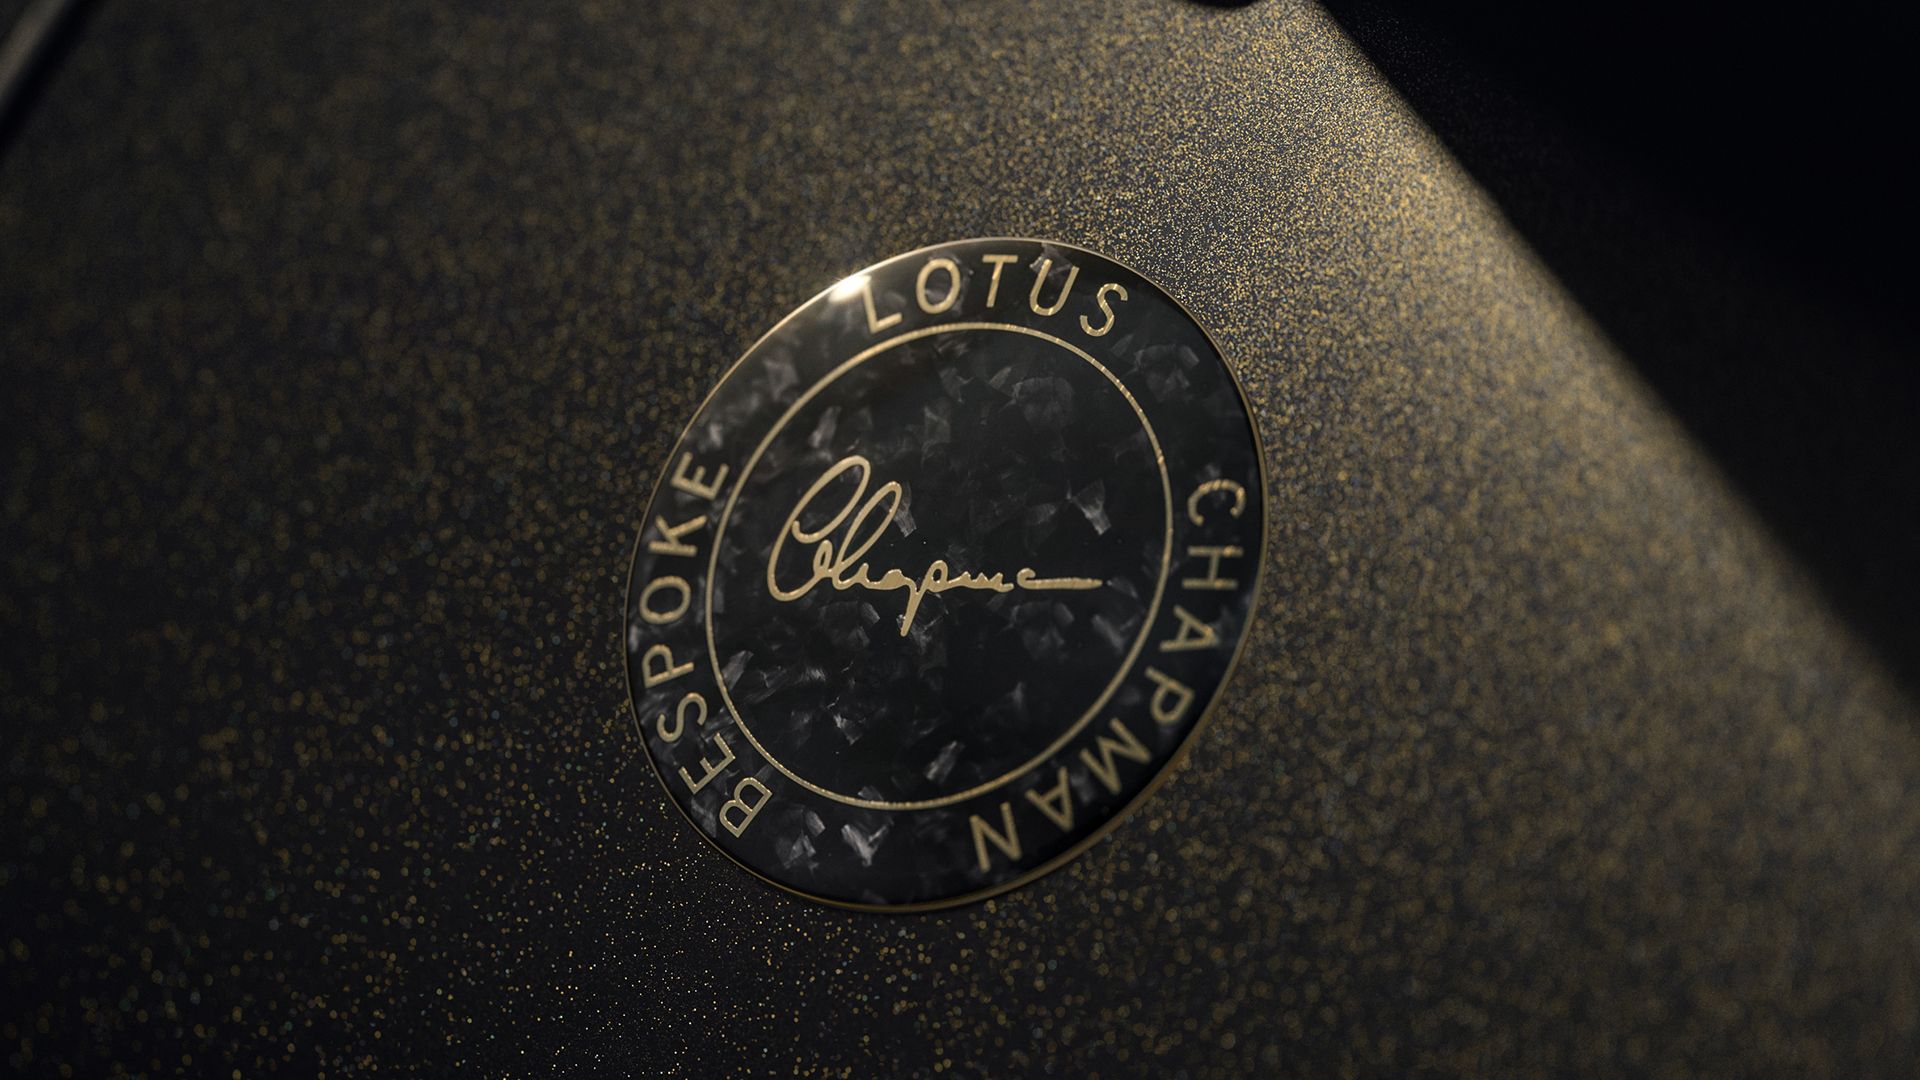 Lotus Chapman Bespoke Eletre Gold Badge closeup